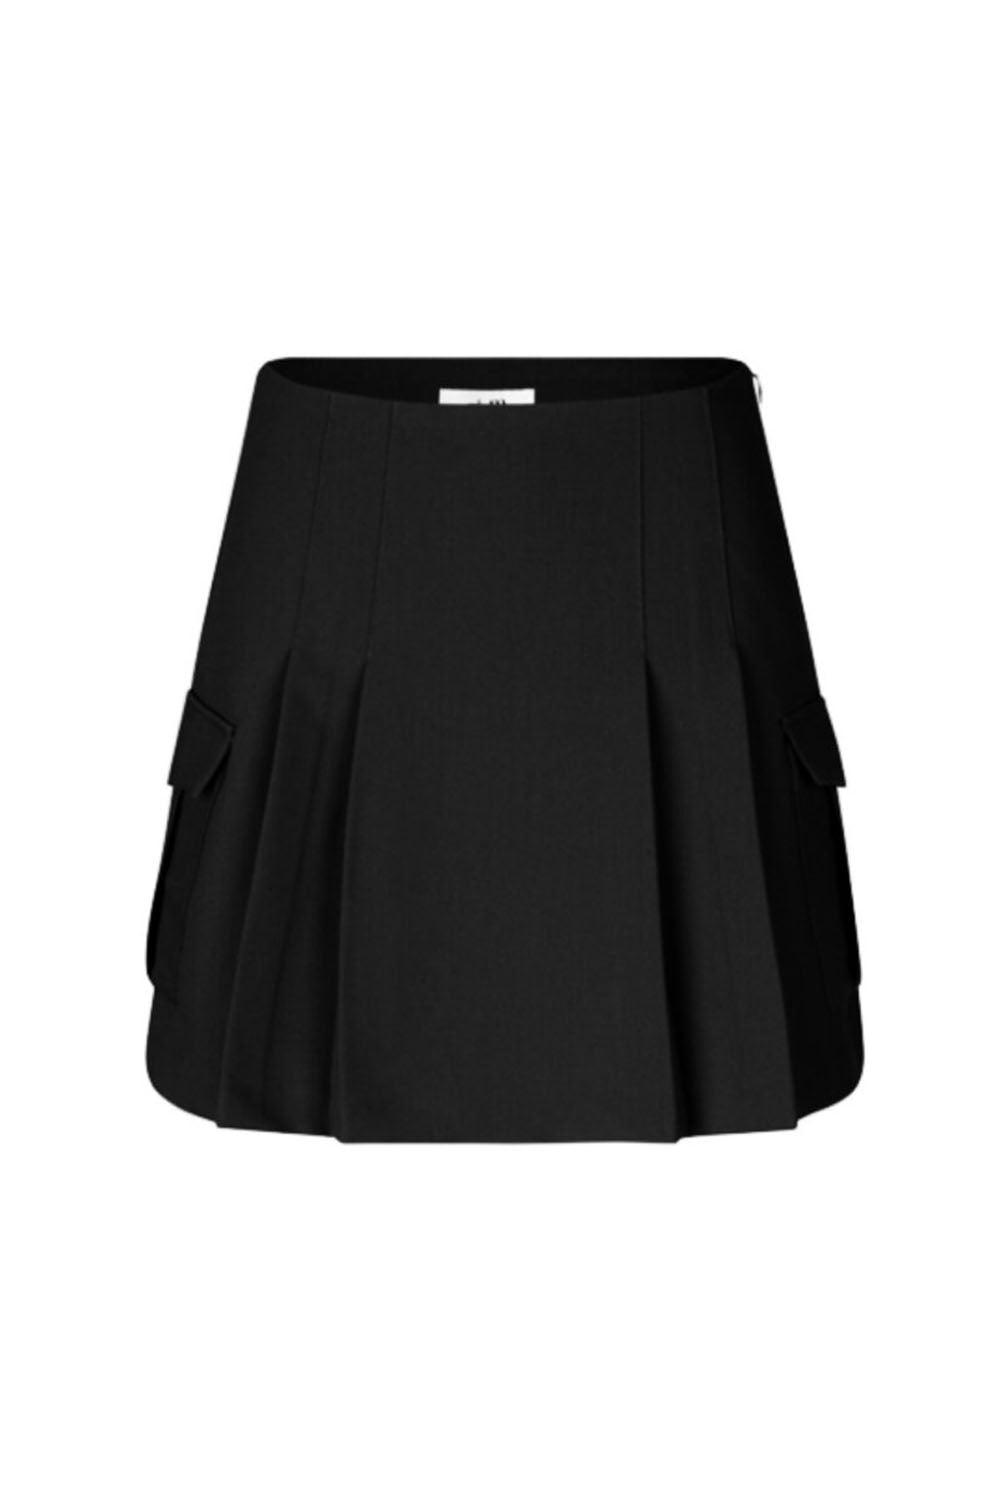 Canika-M Skirt Black